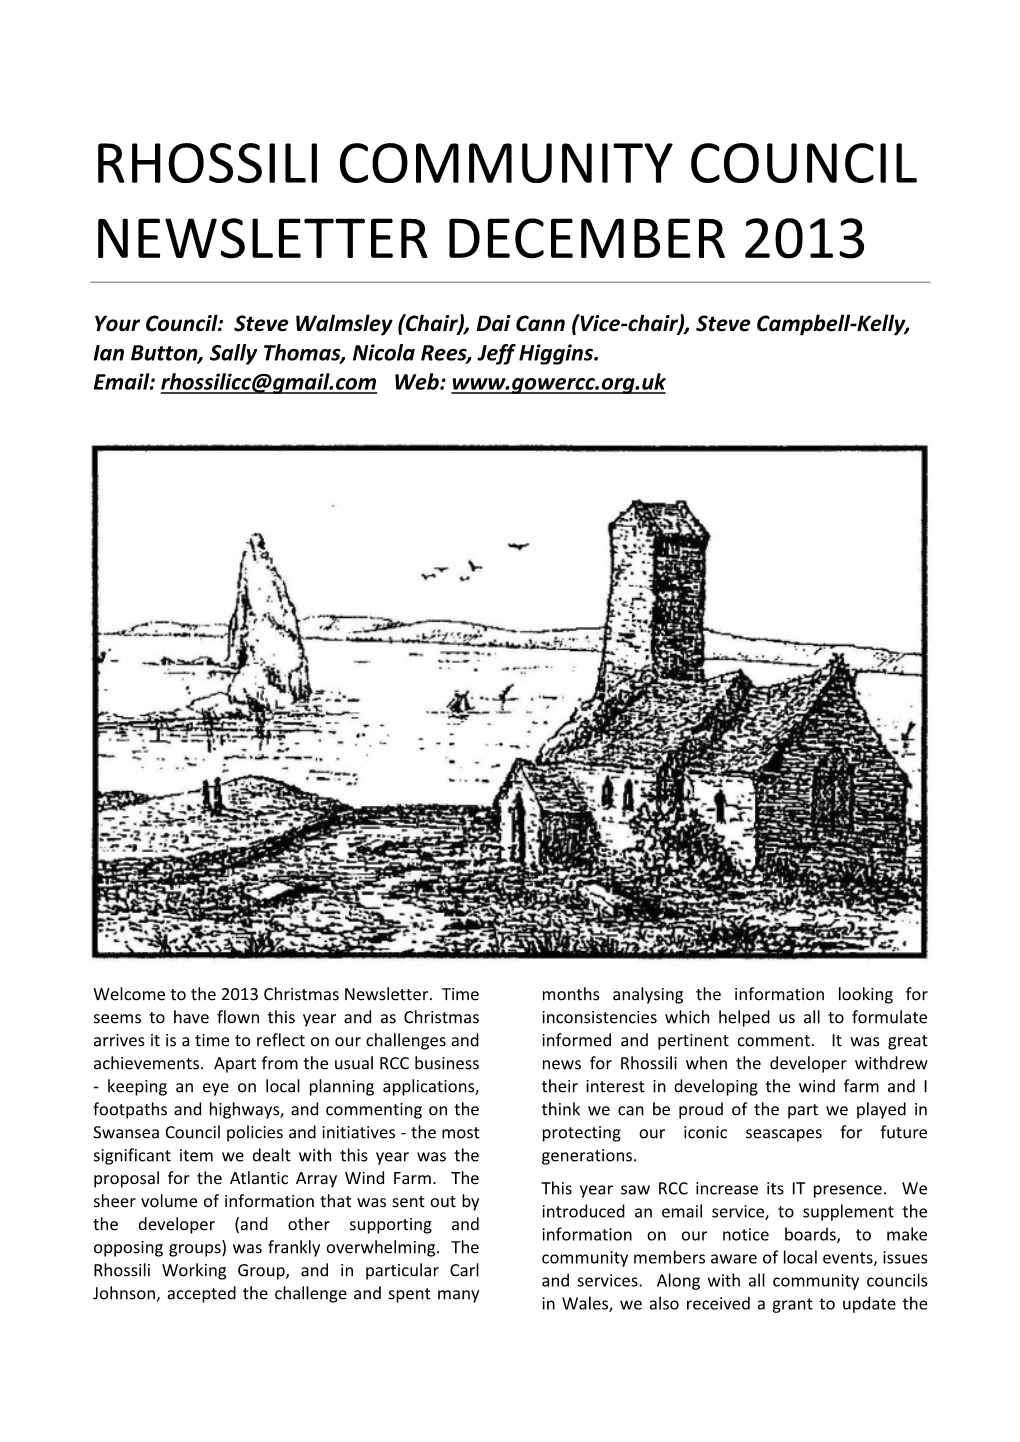 Rhossili Community Council Newsletter December 2013